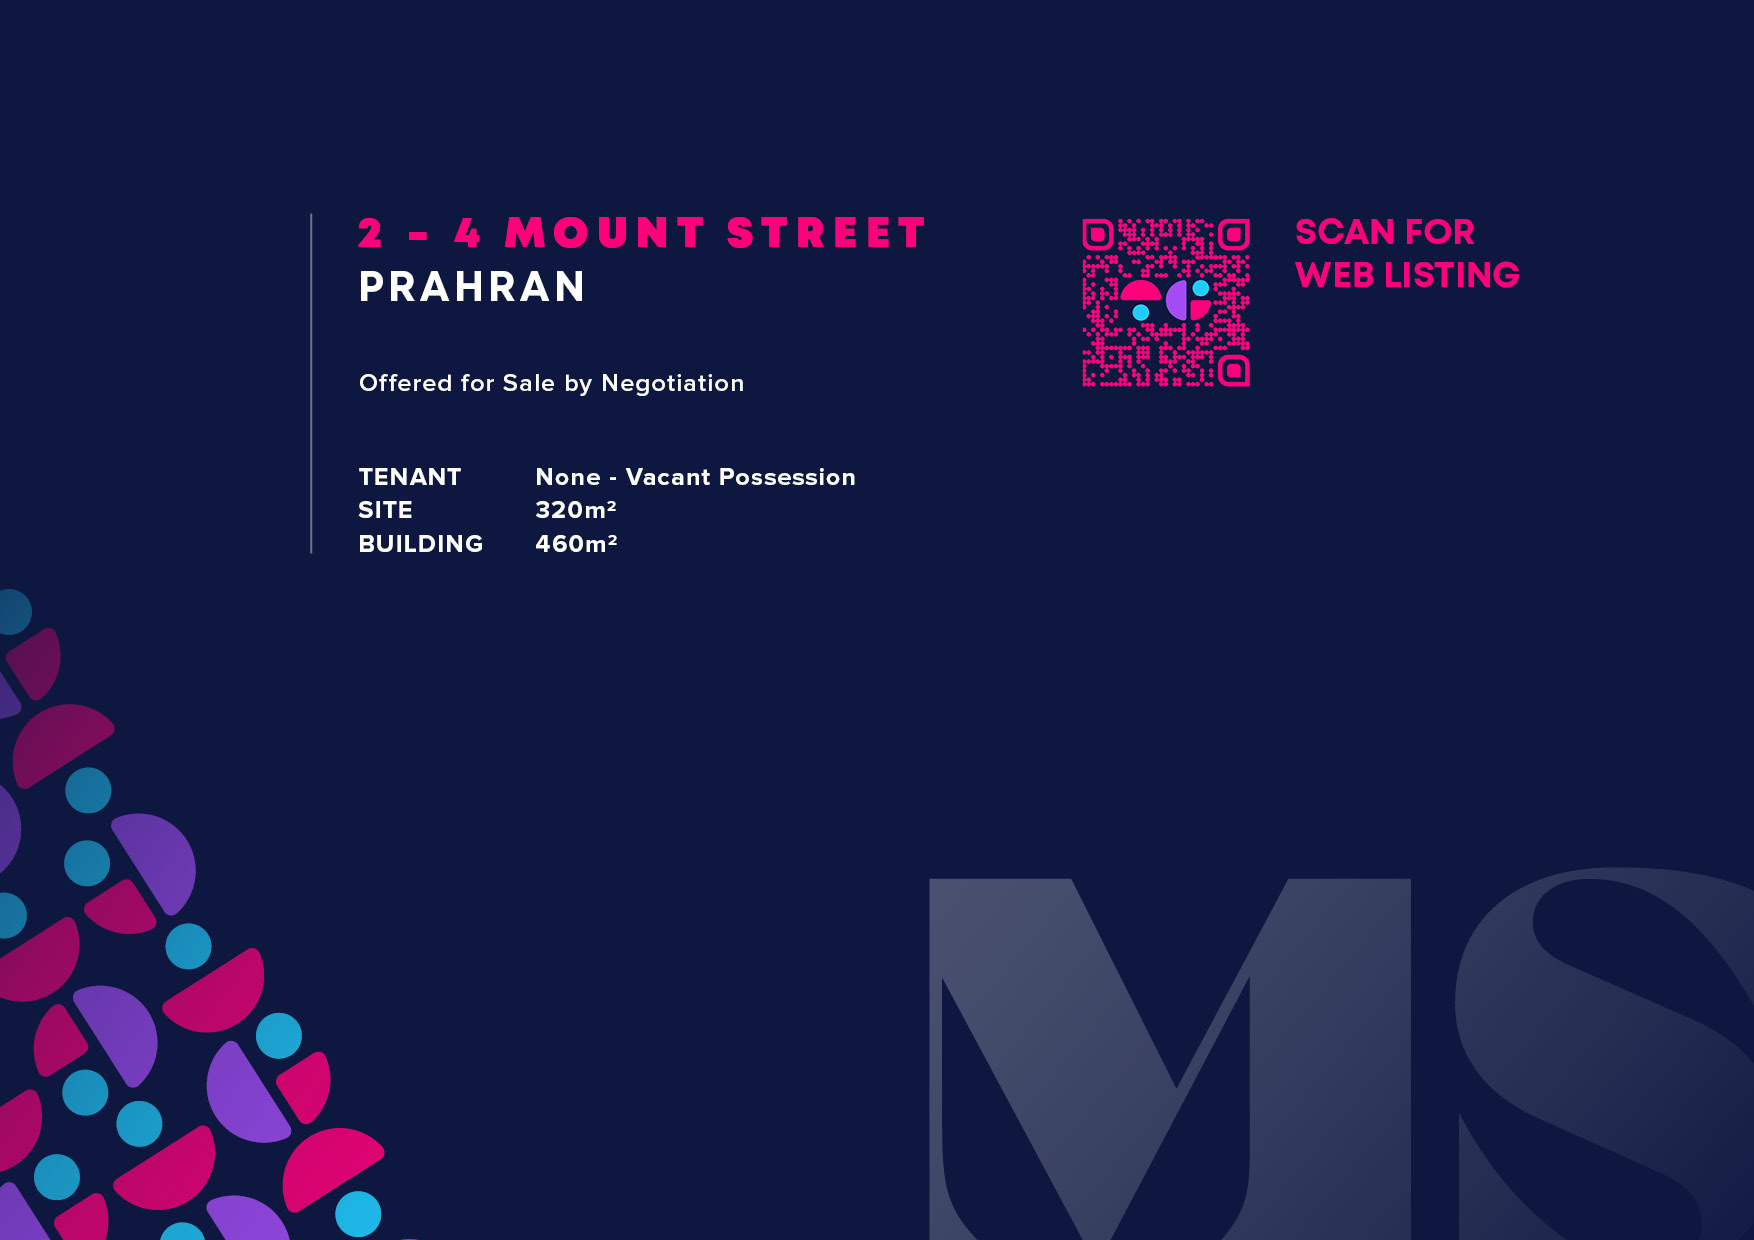 Sale The Mount Street Studio 2 Mount Street Prahran Real Estate Prahran Office Commercial Real Estate TCI